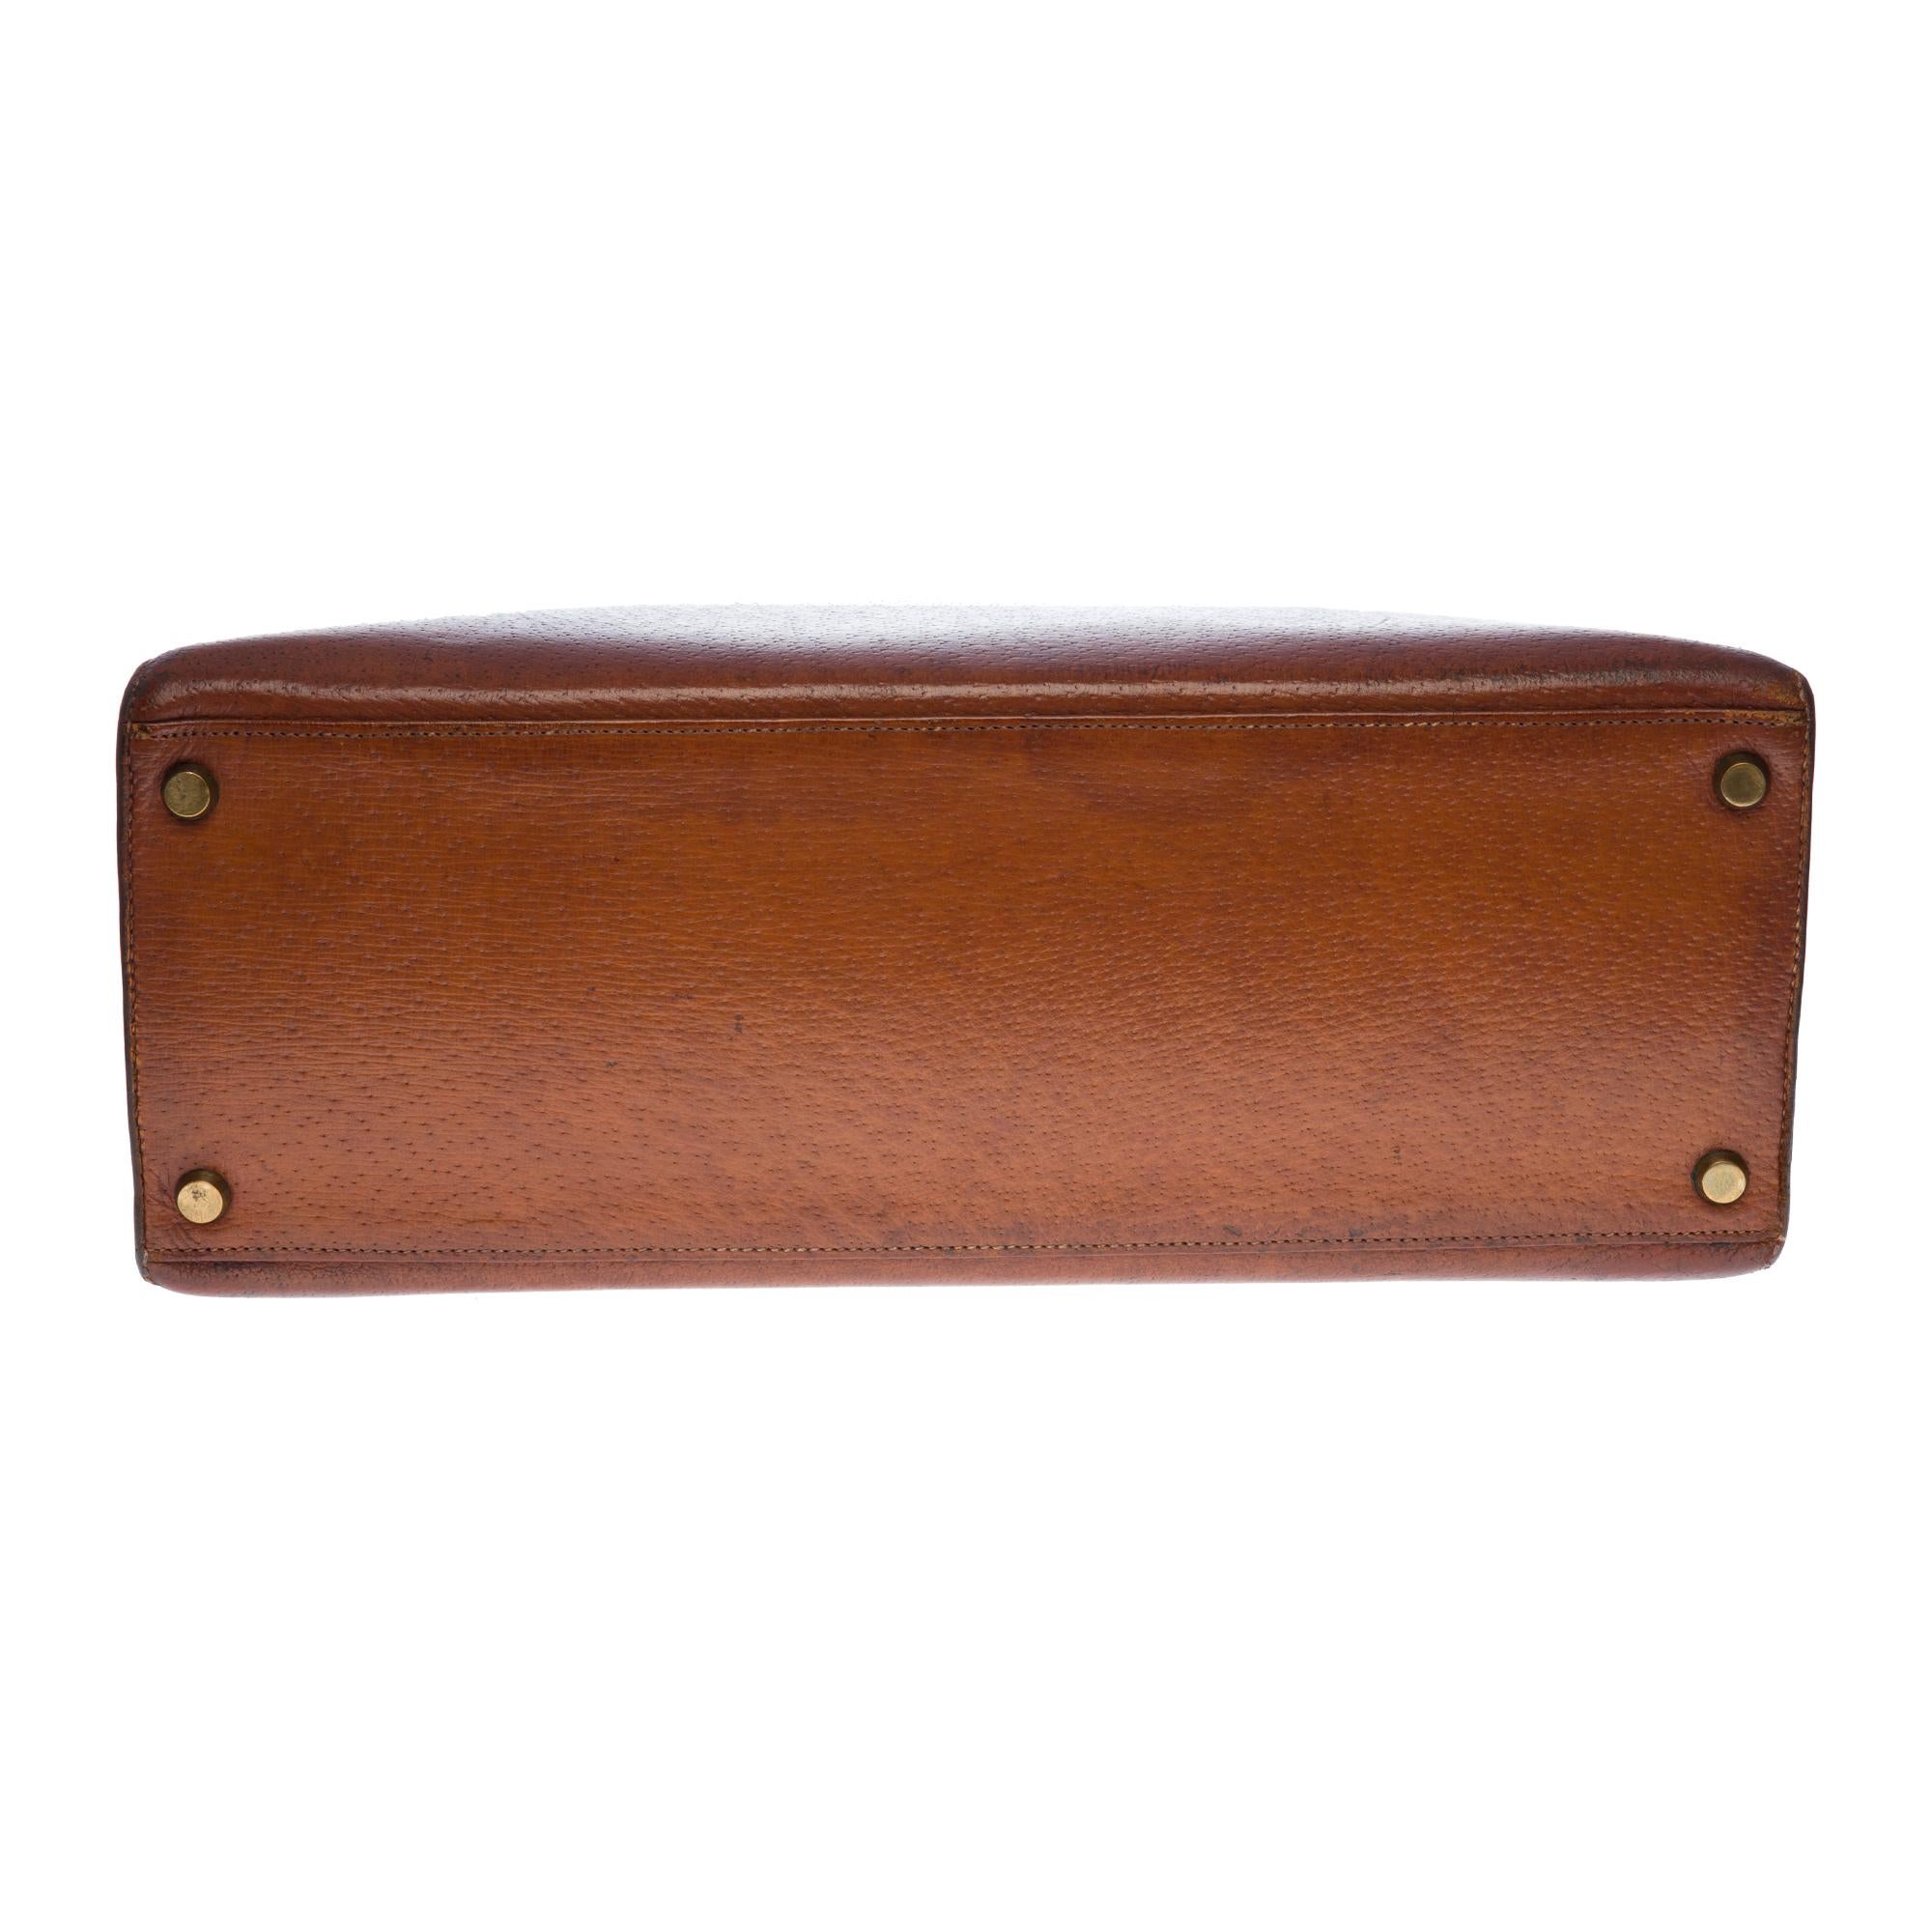 Hermès Kelly 32 handbag with strap in Brown Pecari leather, GHW 5